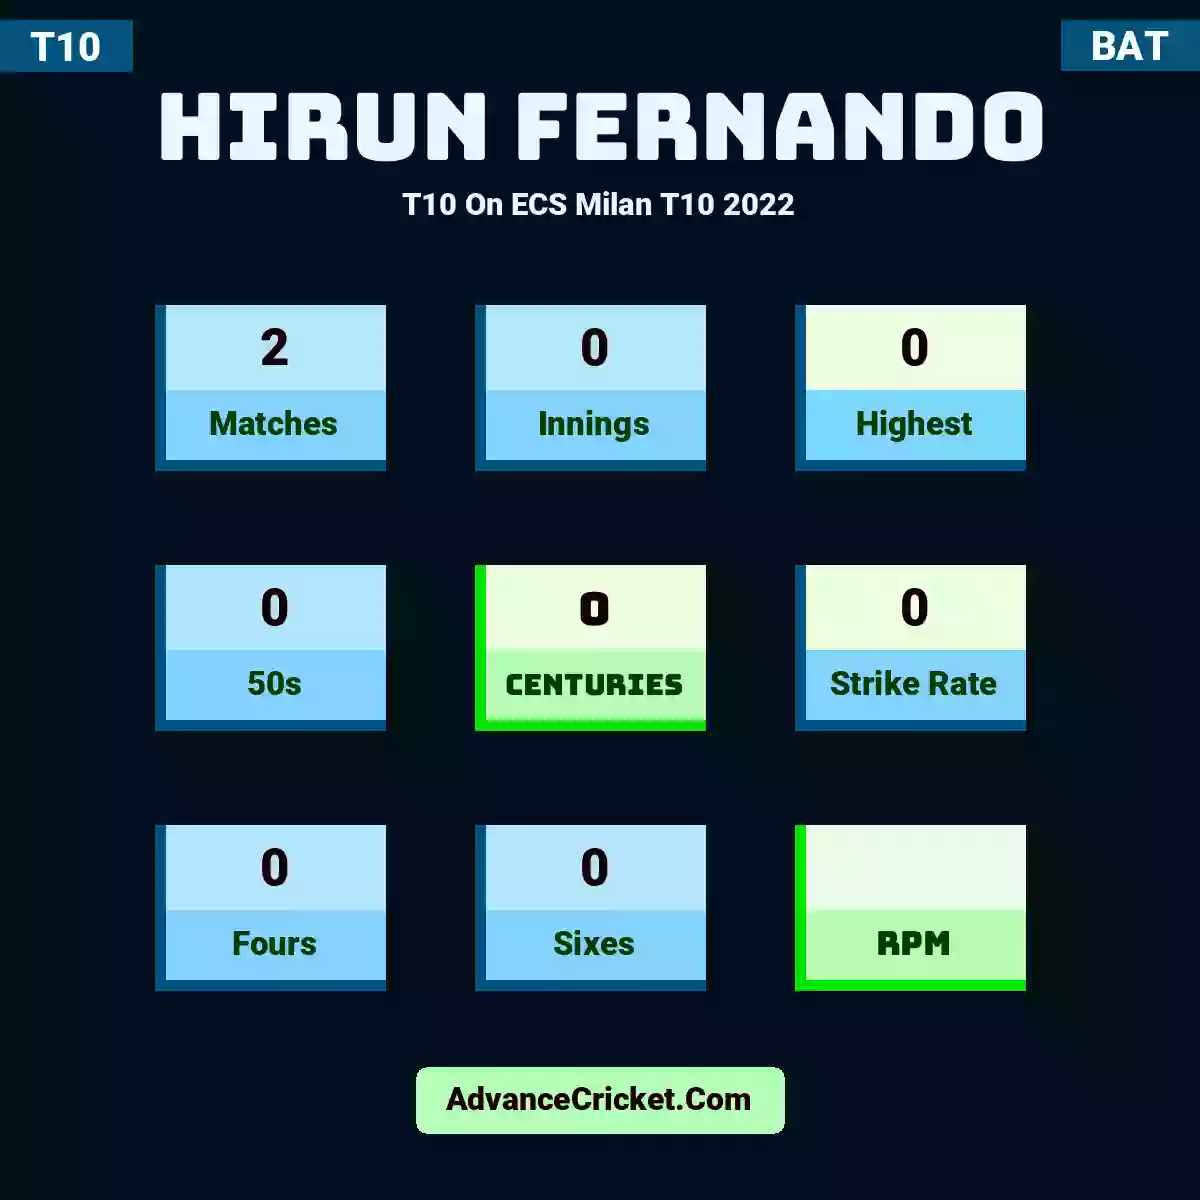 Hirun Fernando T10  On ECS Milan T10 2022, Hirun Fernando played 2 matches, scored 0 runs as highest, 0 half-centuries, and 0 centuries, with a strike rate of 0. H.Fernando hit 0 fours and 0 sixes.